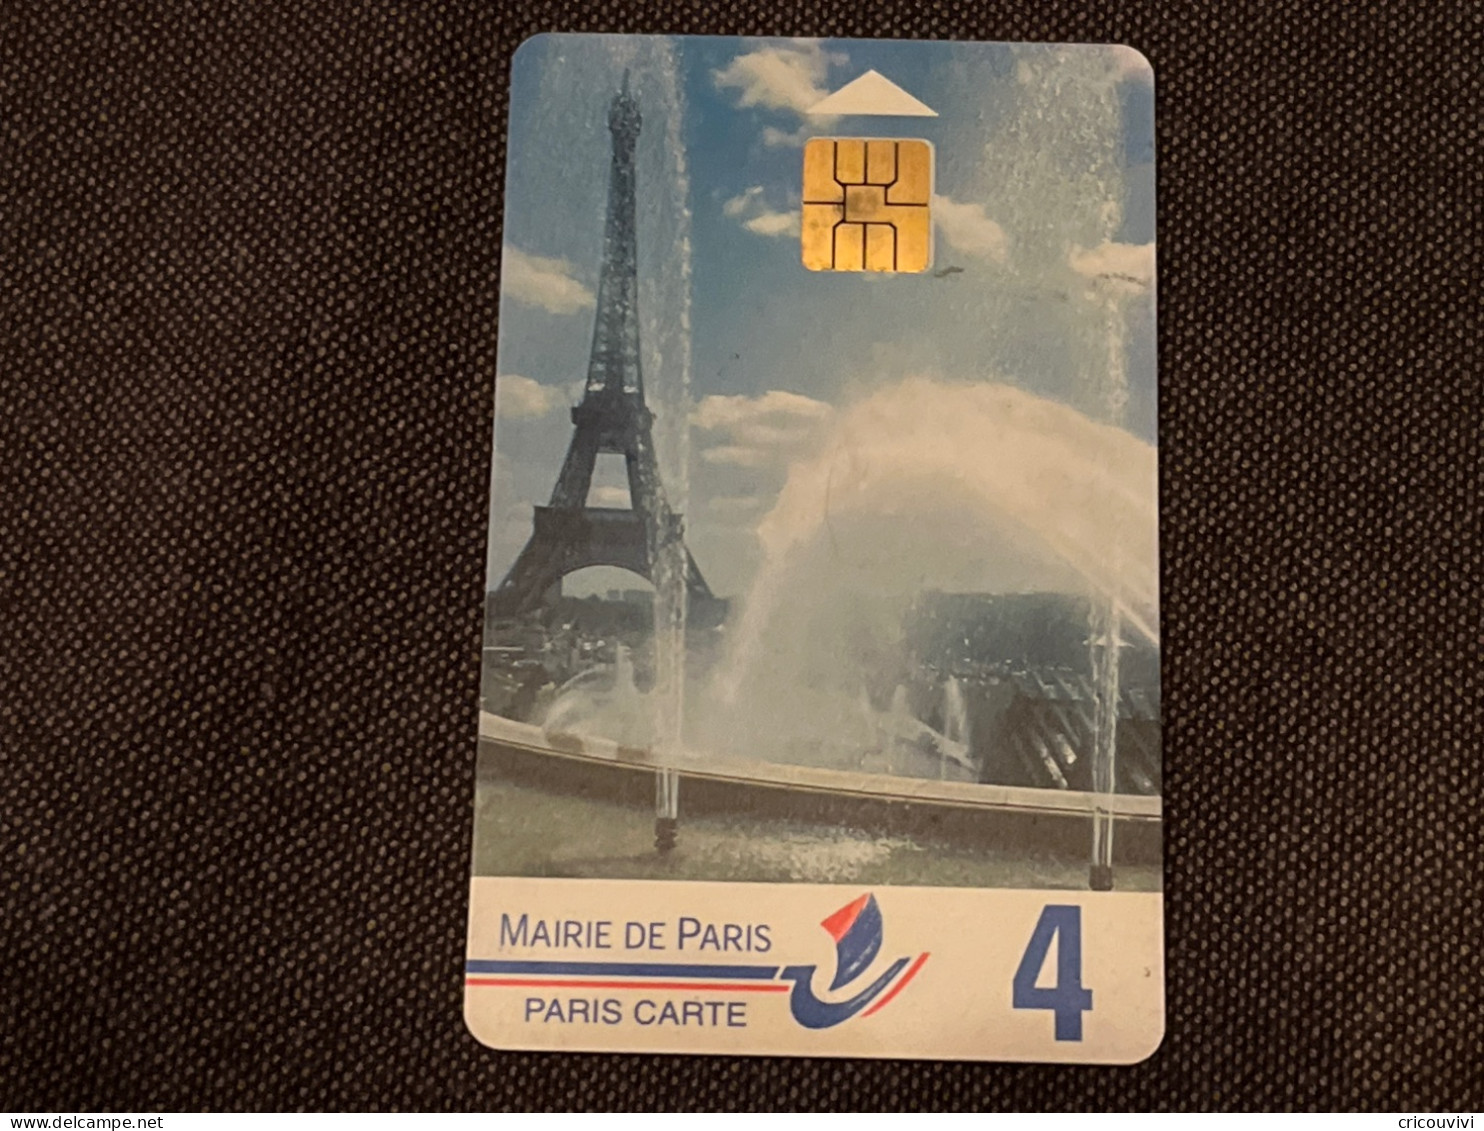 Paris Carte 15 - PIAF Parking Cards